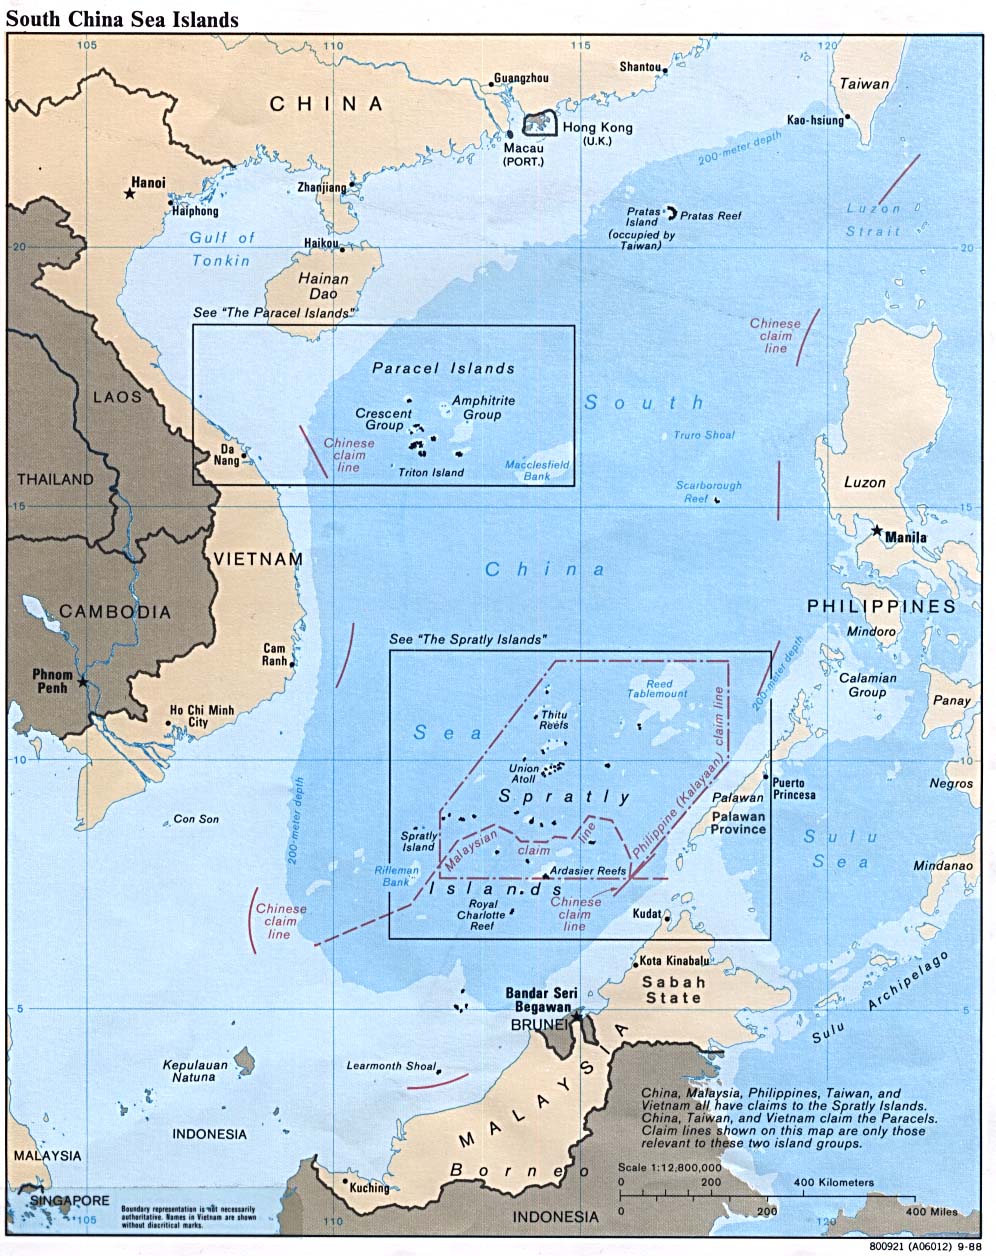 http://www.lib.utexas.edu/maps/middle_east_and_asia/schina_sea_88.jpg